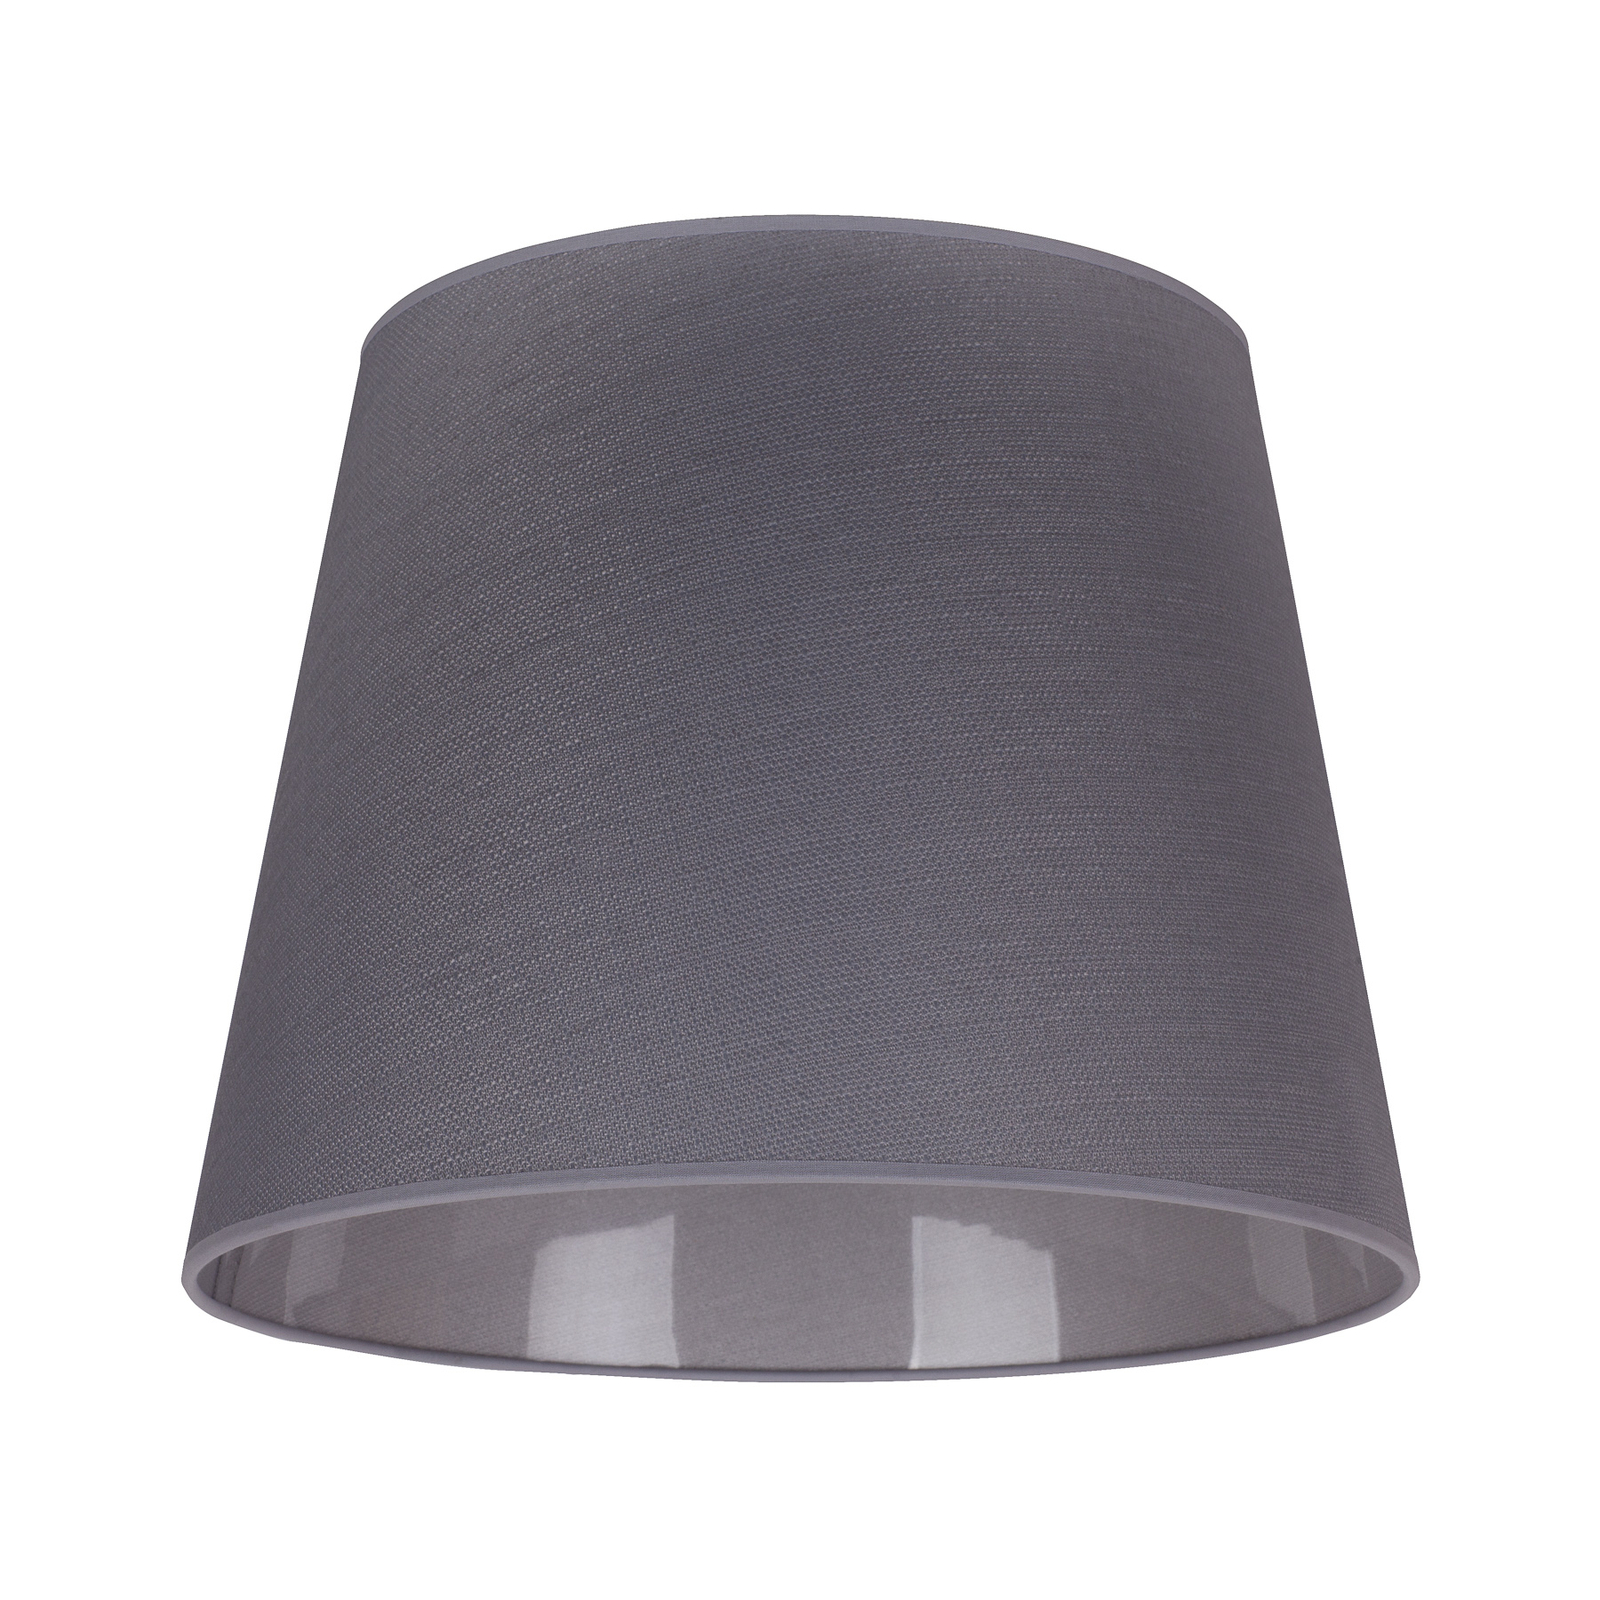 Classic L floor lamp lampshade, veroni grey